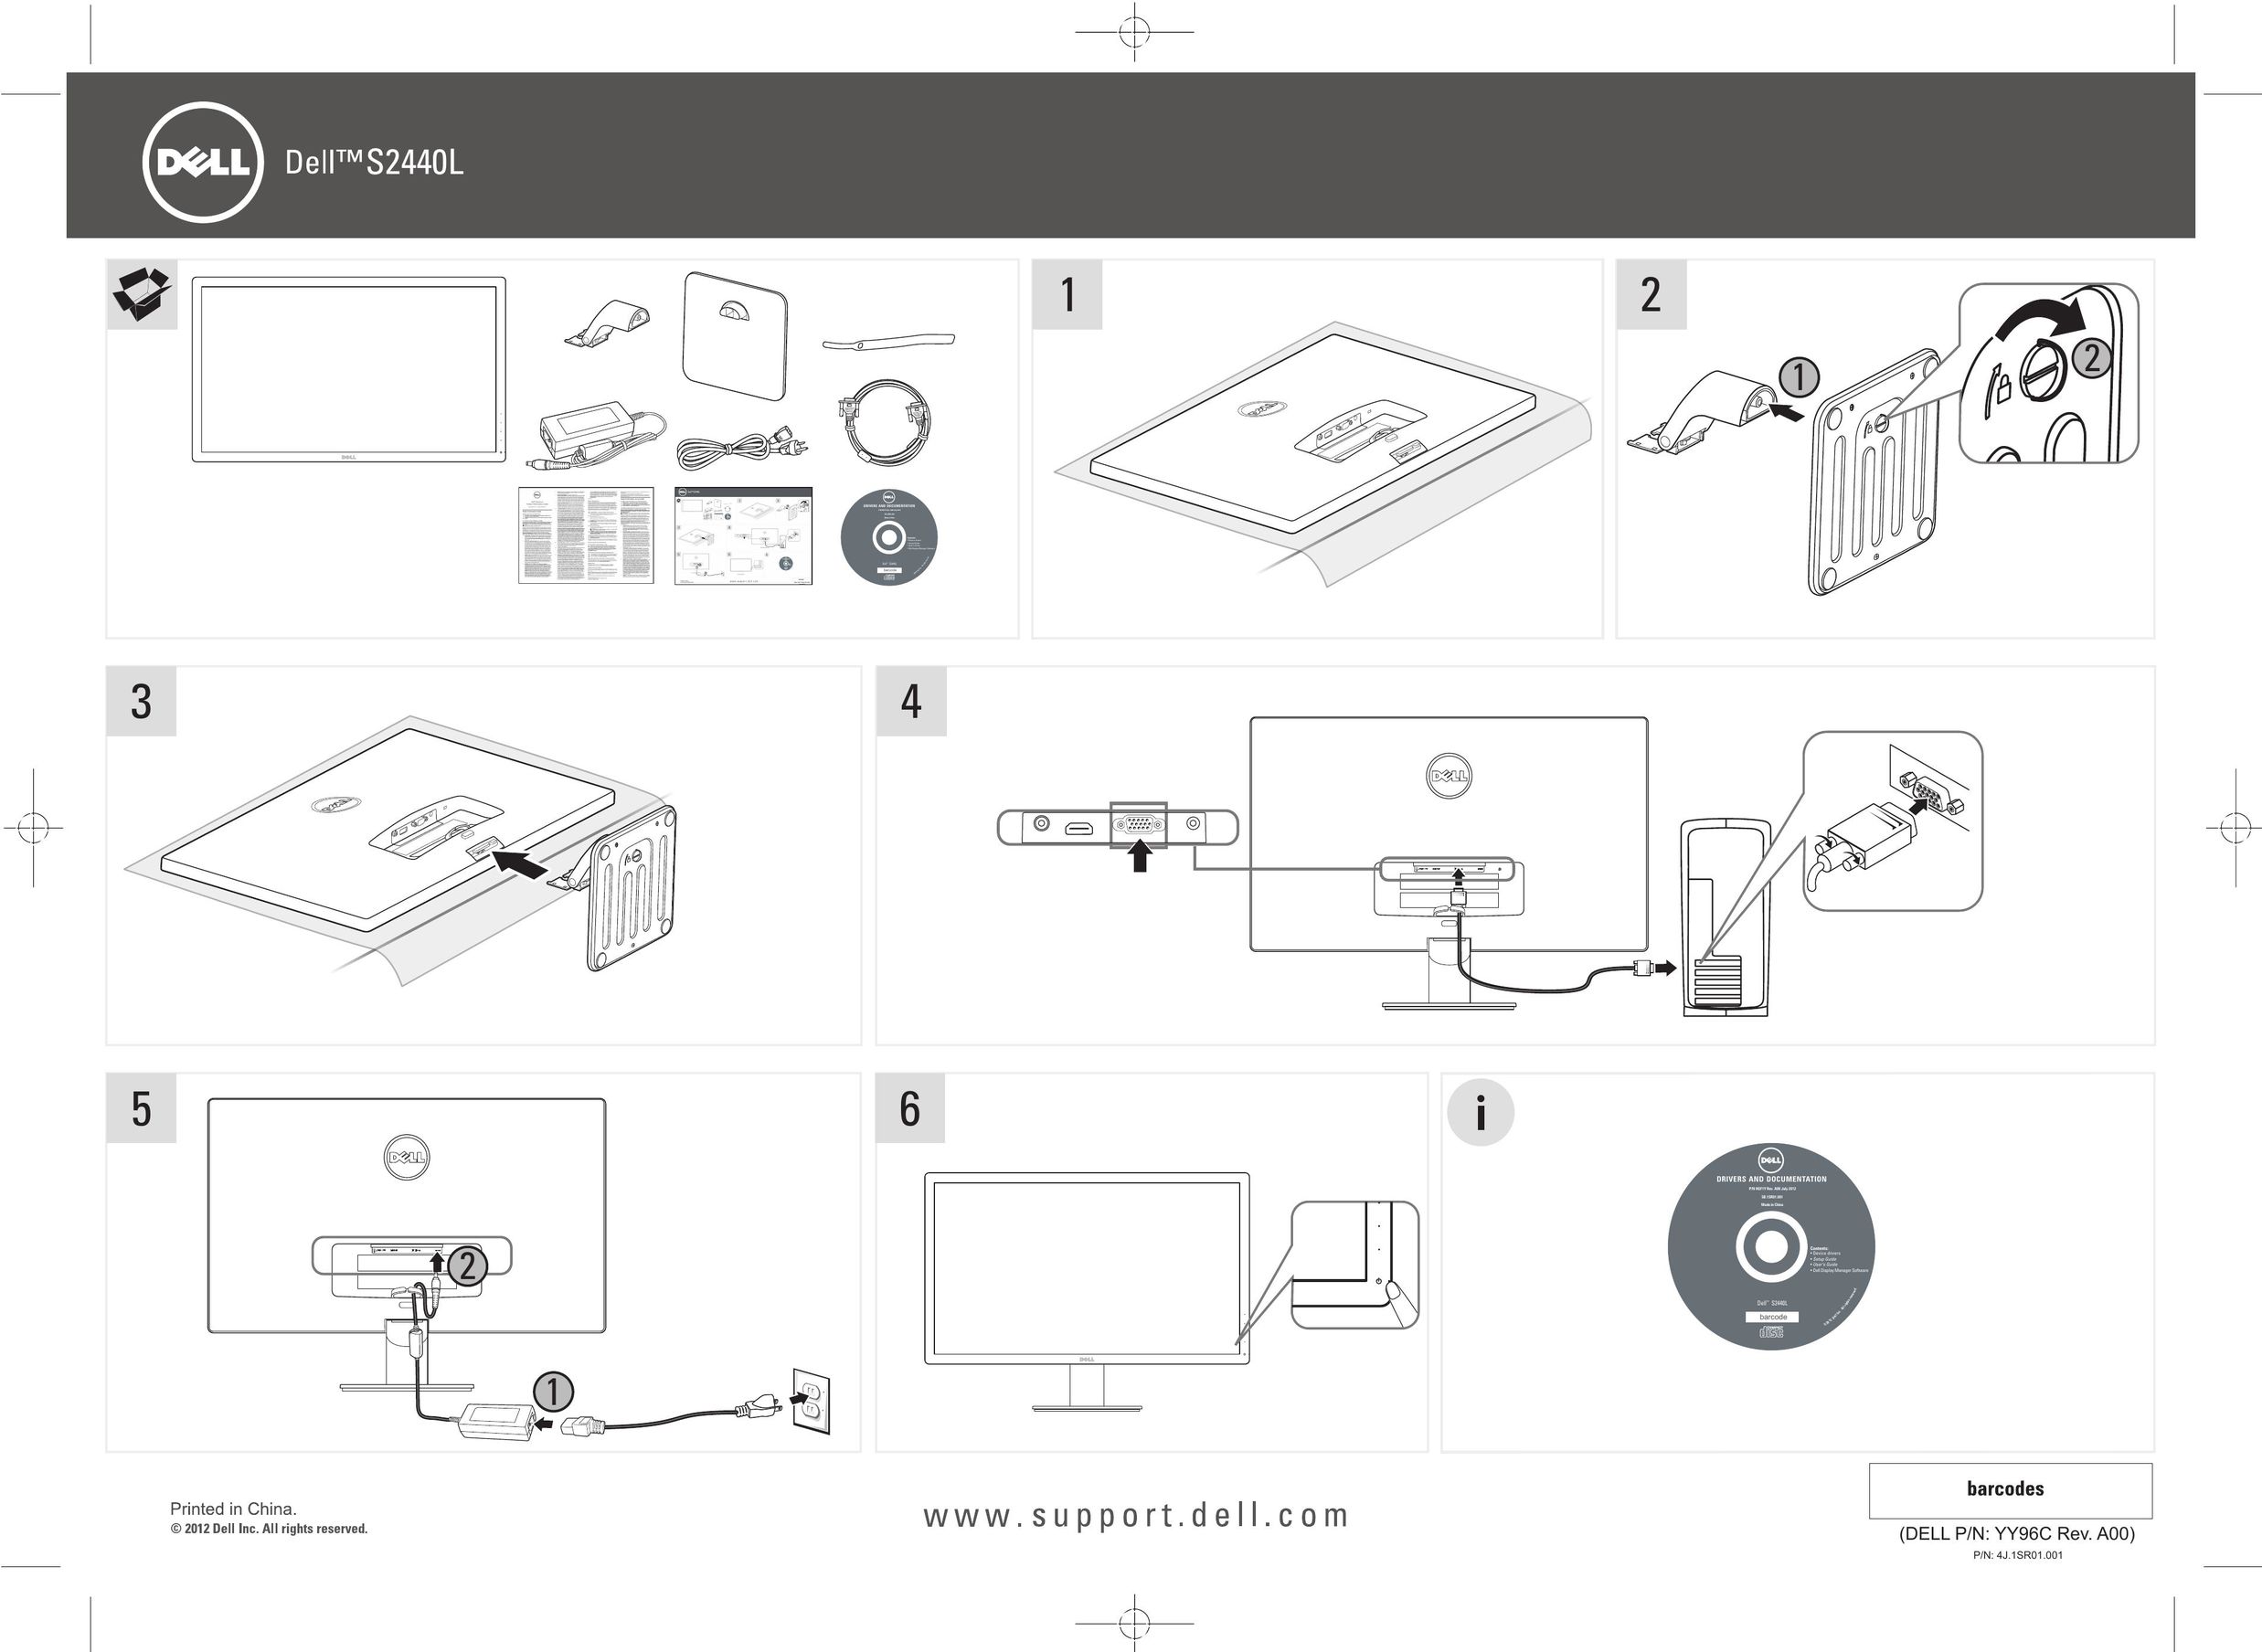 Dell S2440L Car Video System User Manual